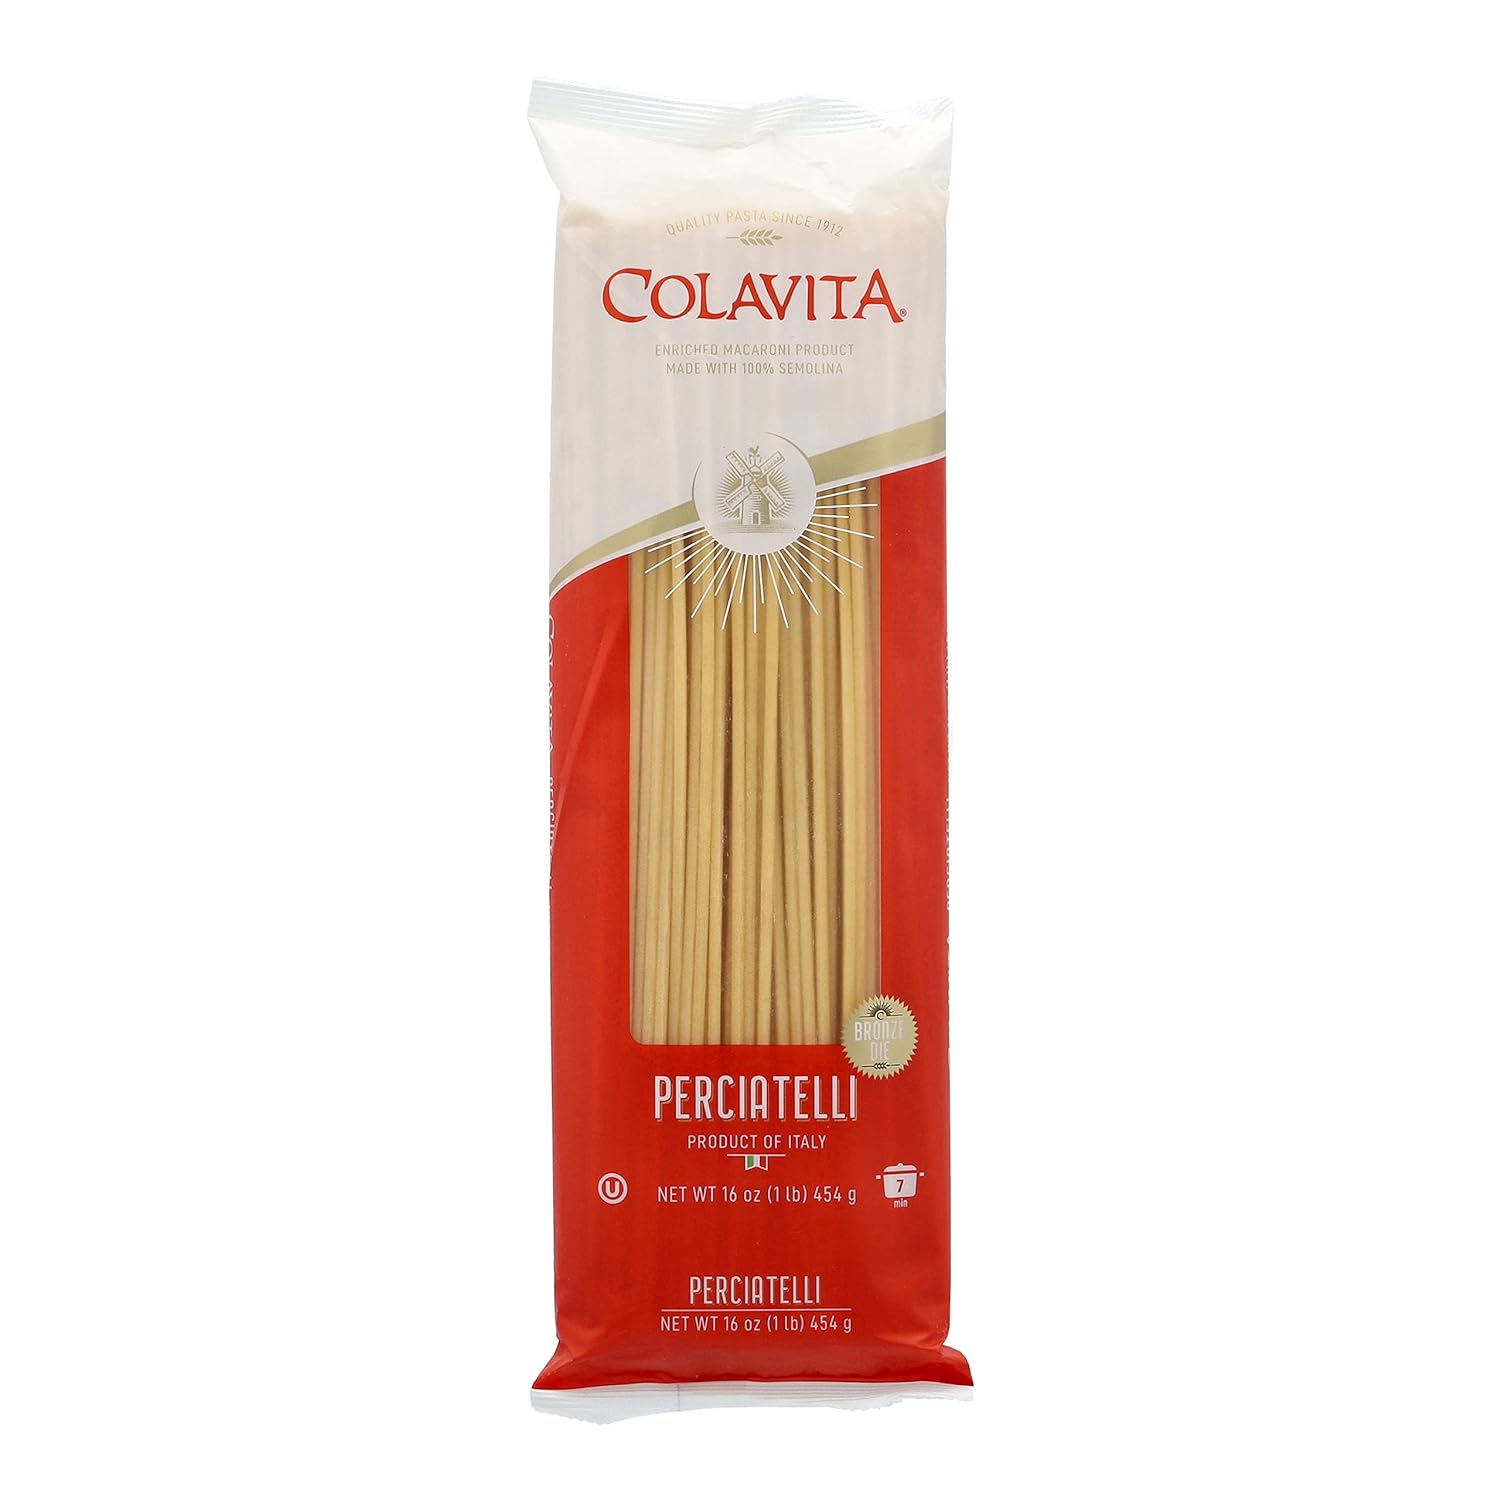 Colavita Pasta - Perciatelli, 1 Pound - Pack of 20